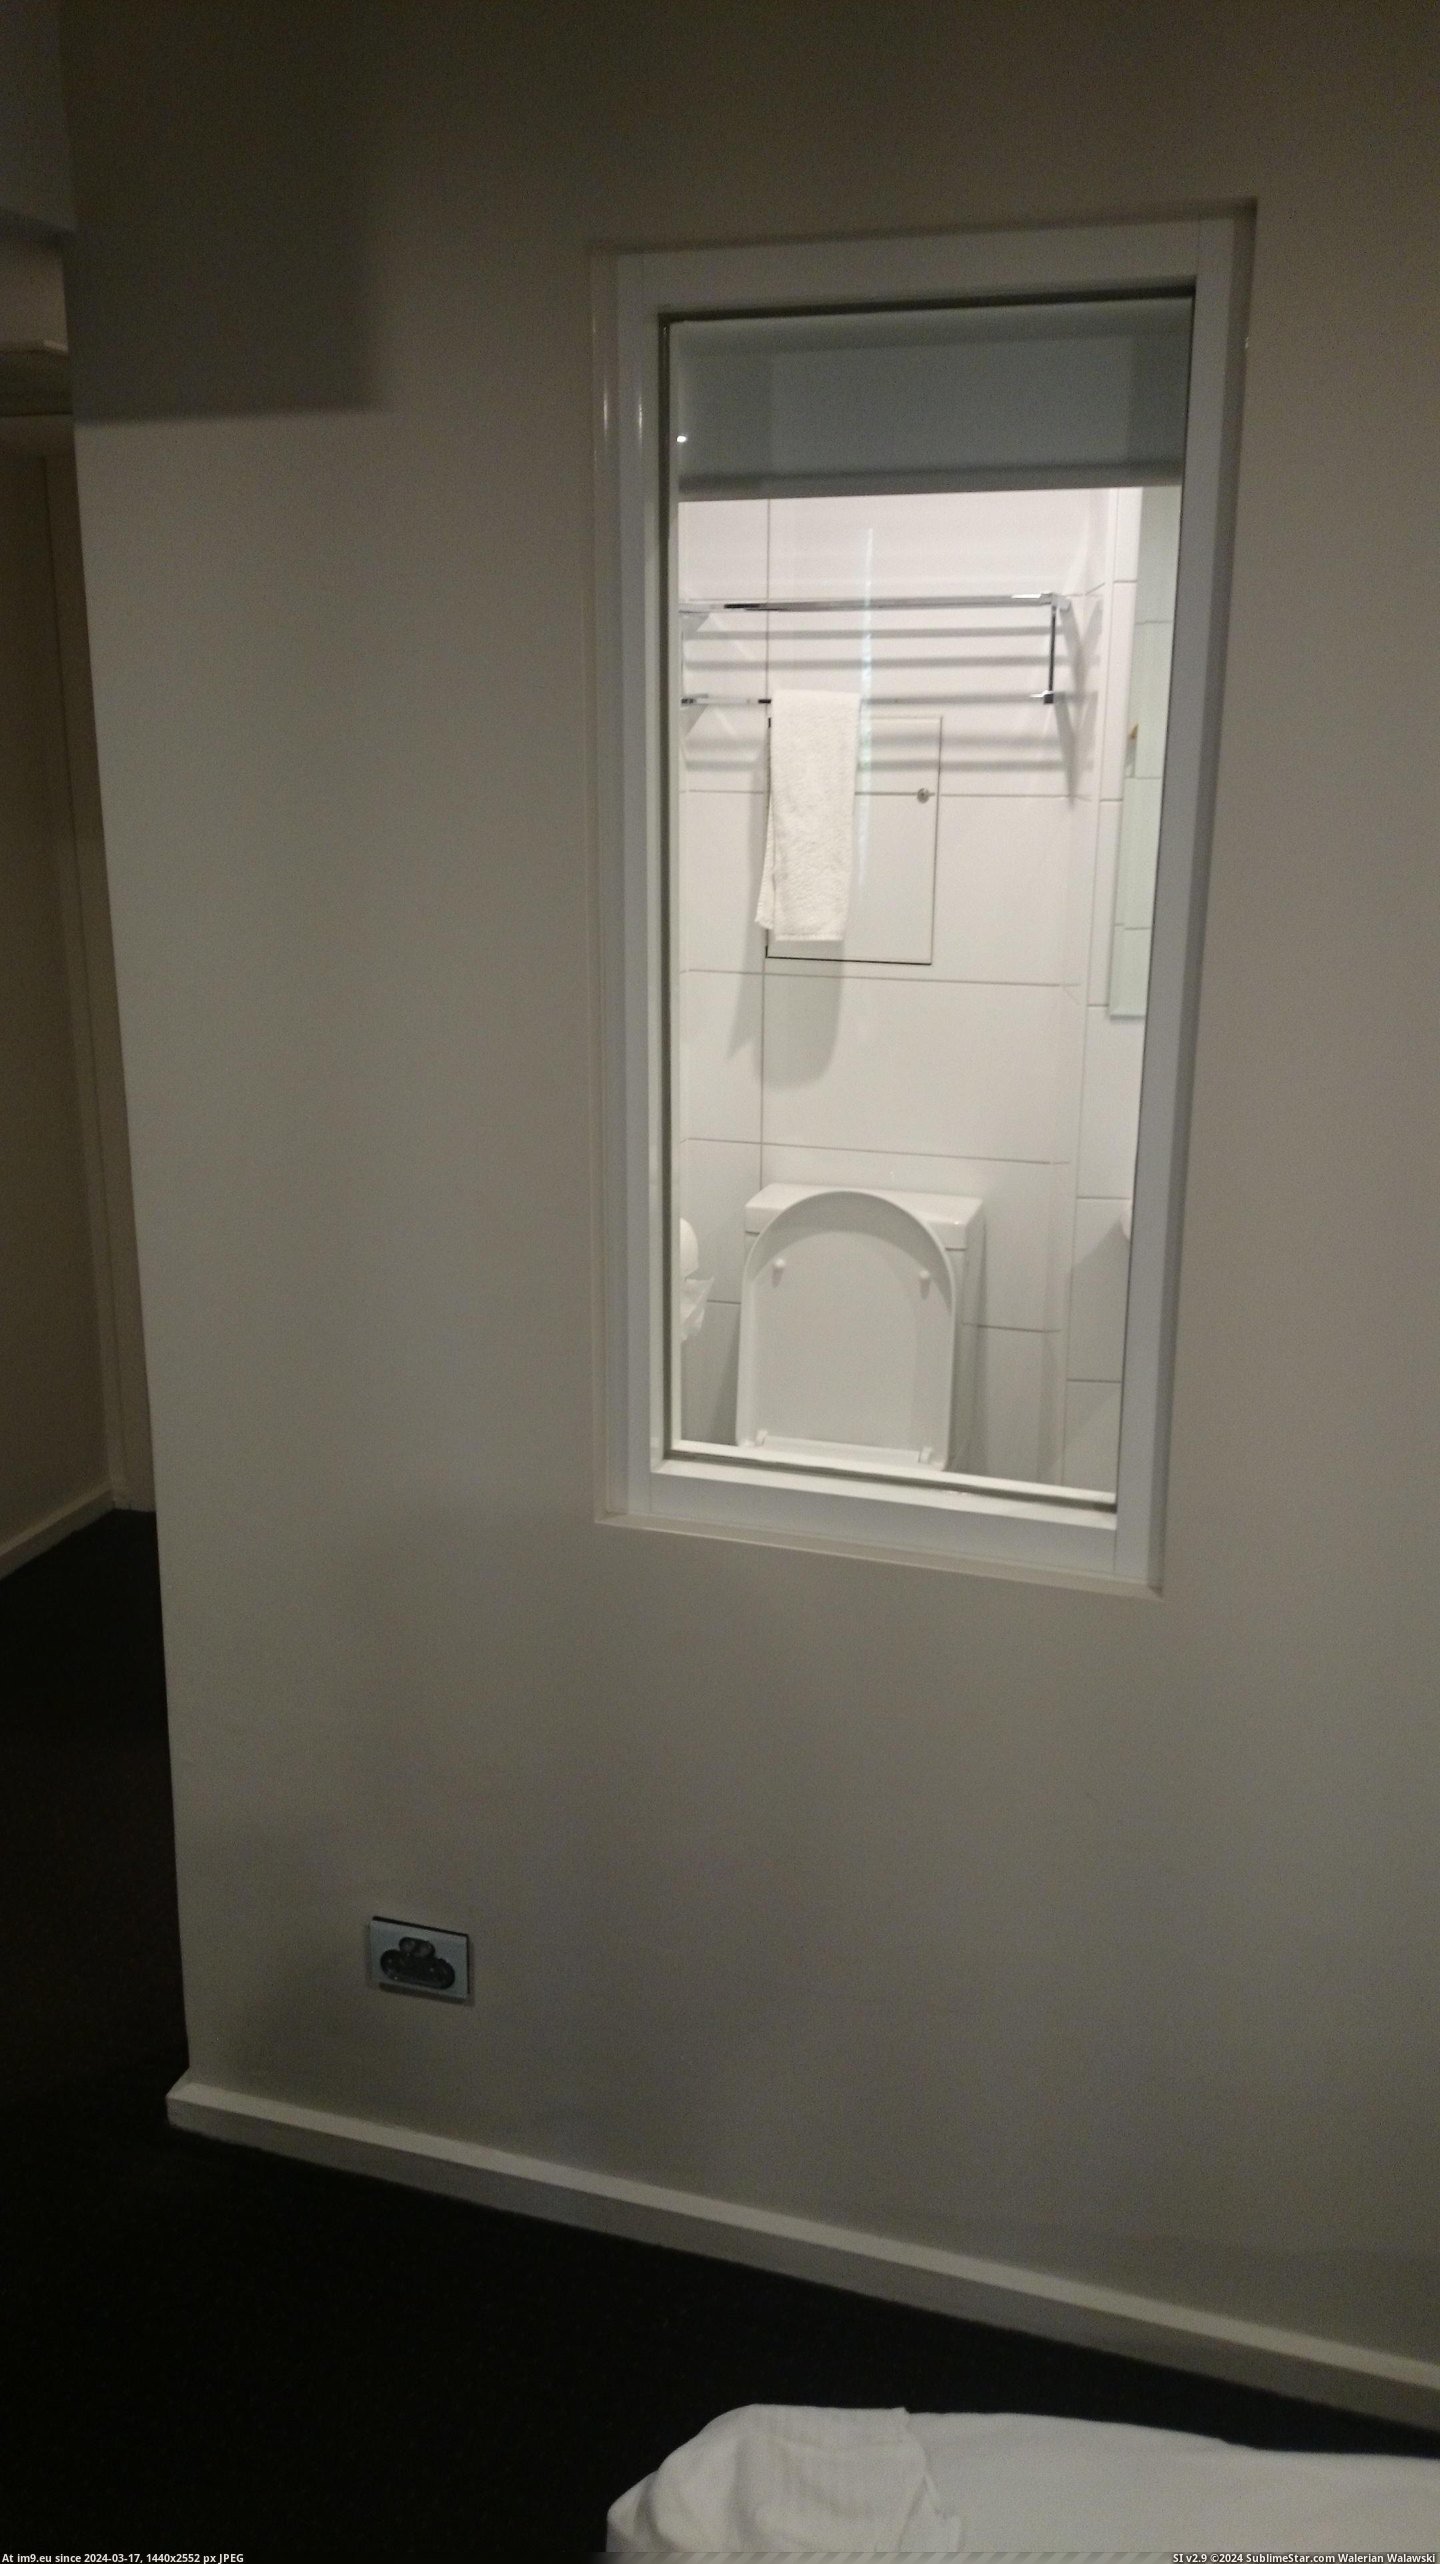 #Room #Window #Toilet #Hotel [Mildlyinteresting] My hotel room has a window to the toilet inside it Pic. (Изображение из альбом My r/MILDLYINTERESTING favs))